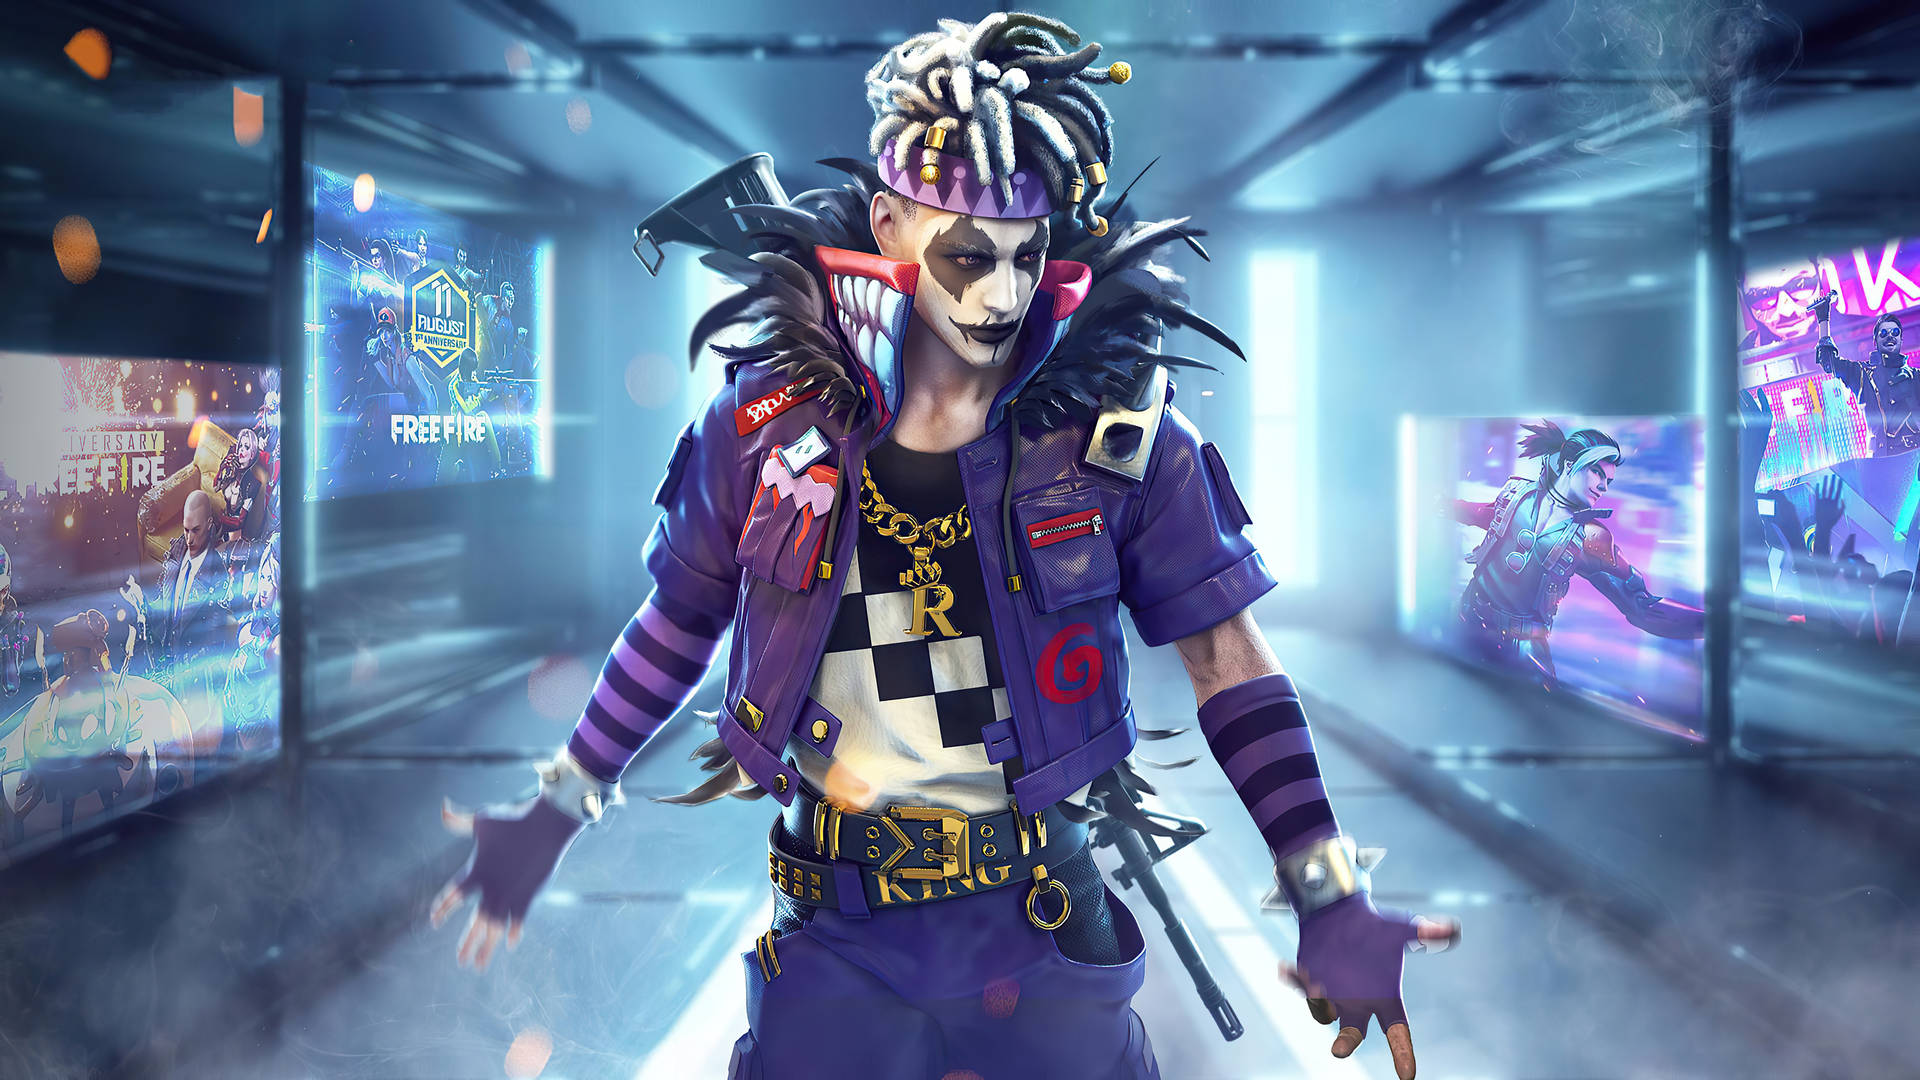 Caption: Showcasing Epic Joker Skin In Free Fire Game Desktop Background